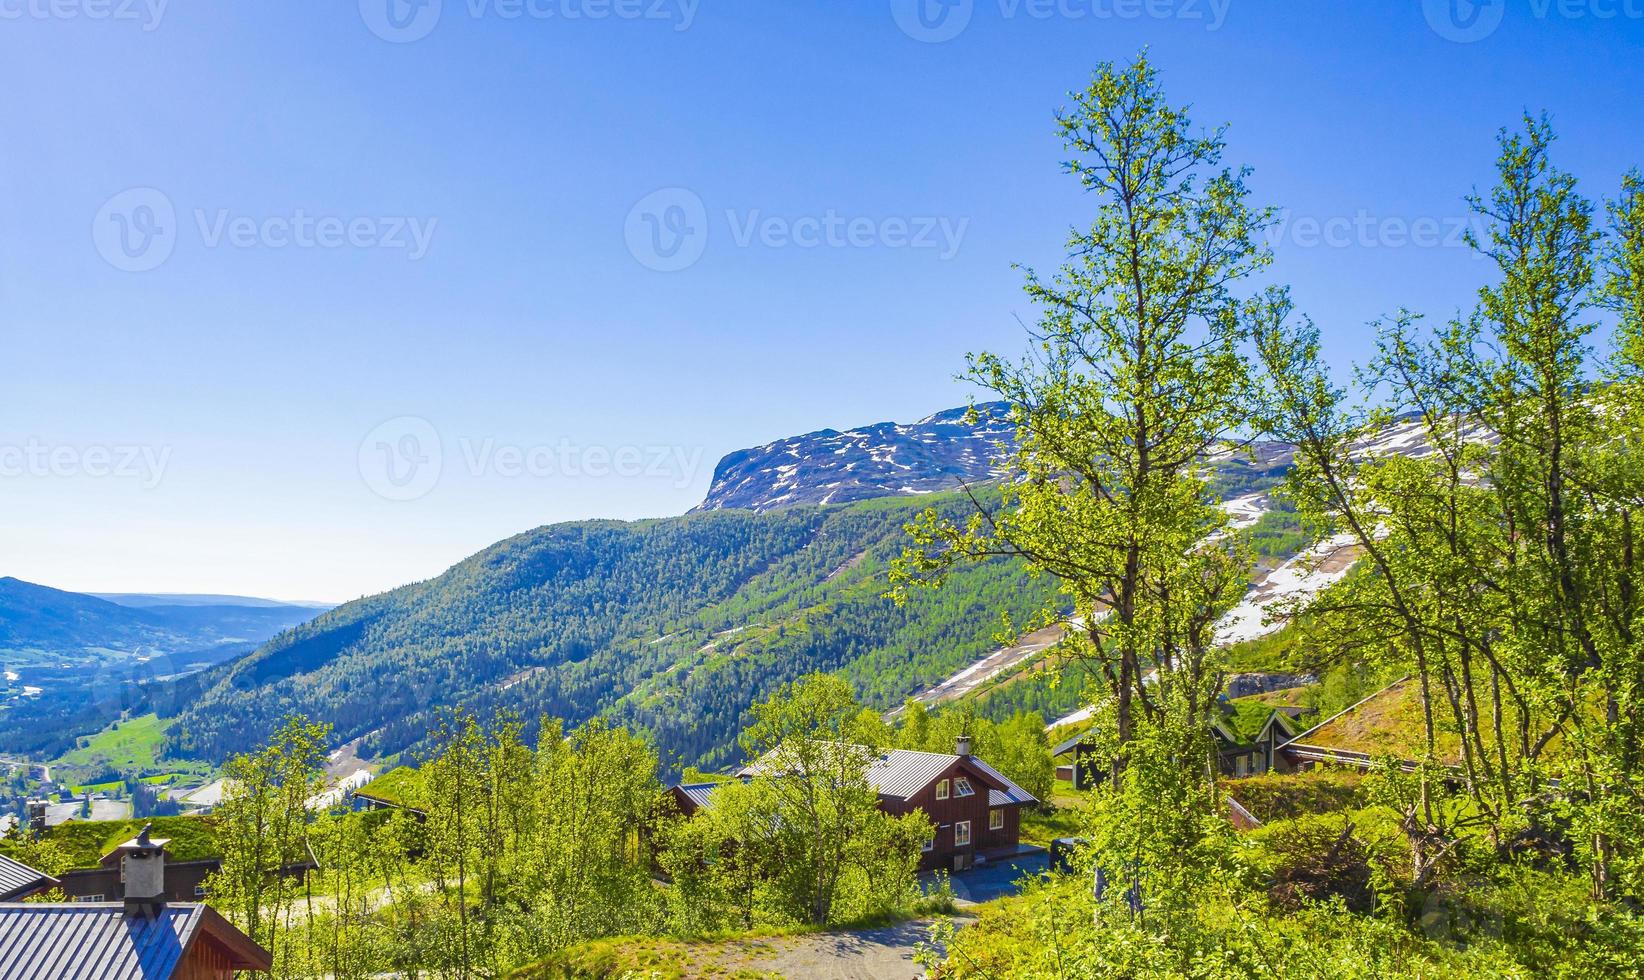 bellissimo panorama sciistico norvegese hemsedal con baite e baite. foto